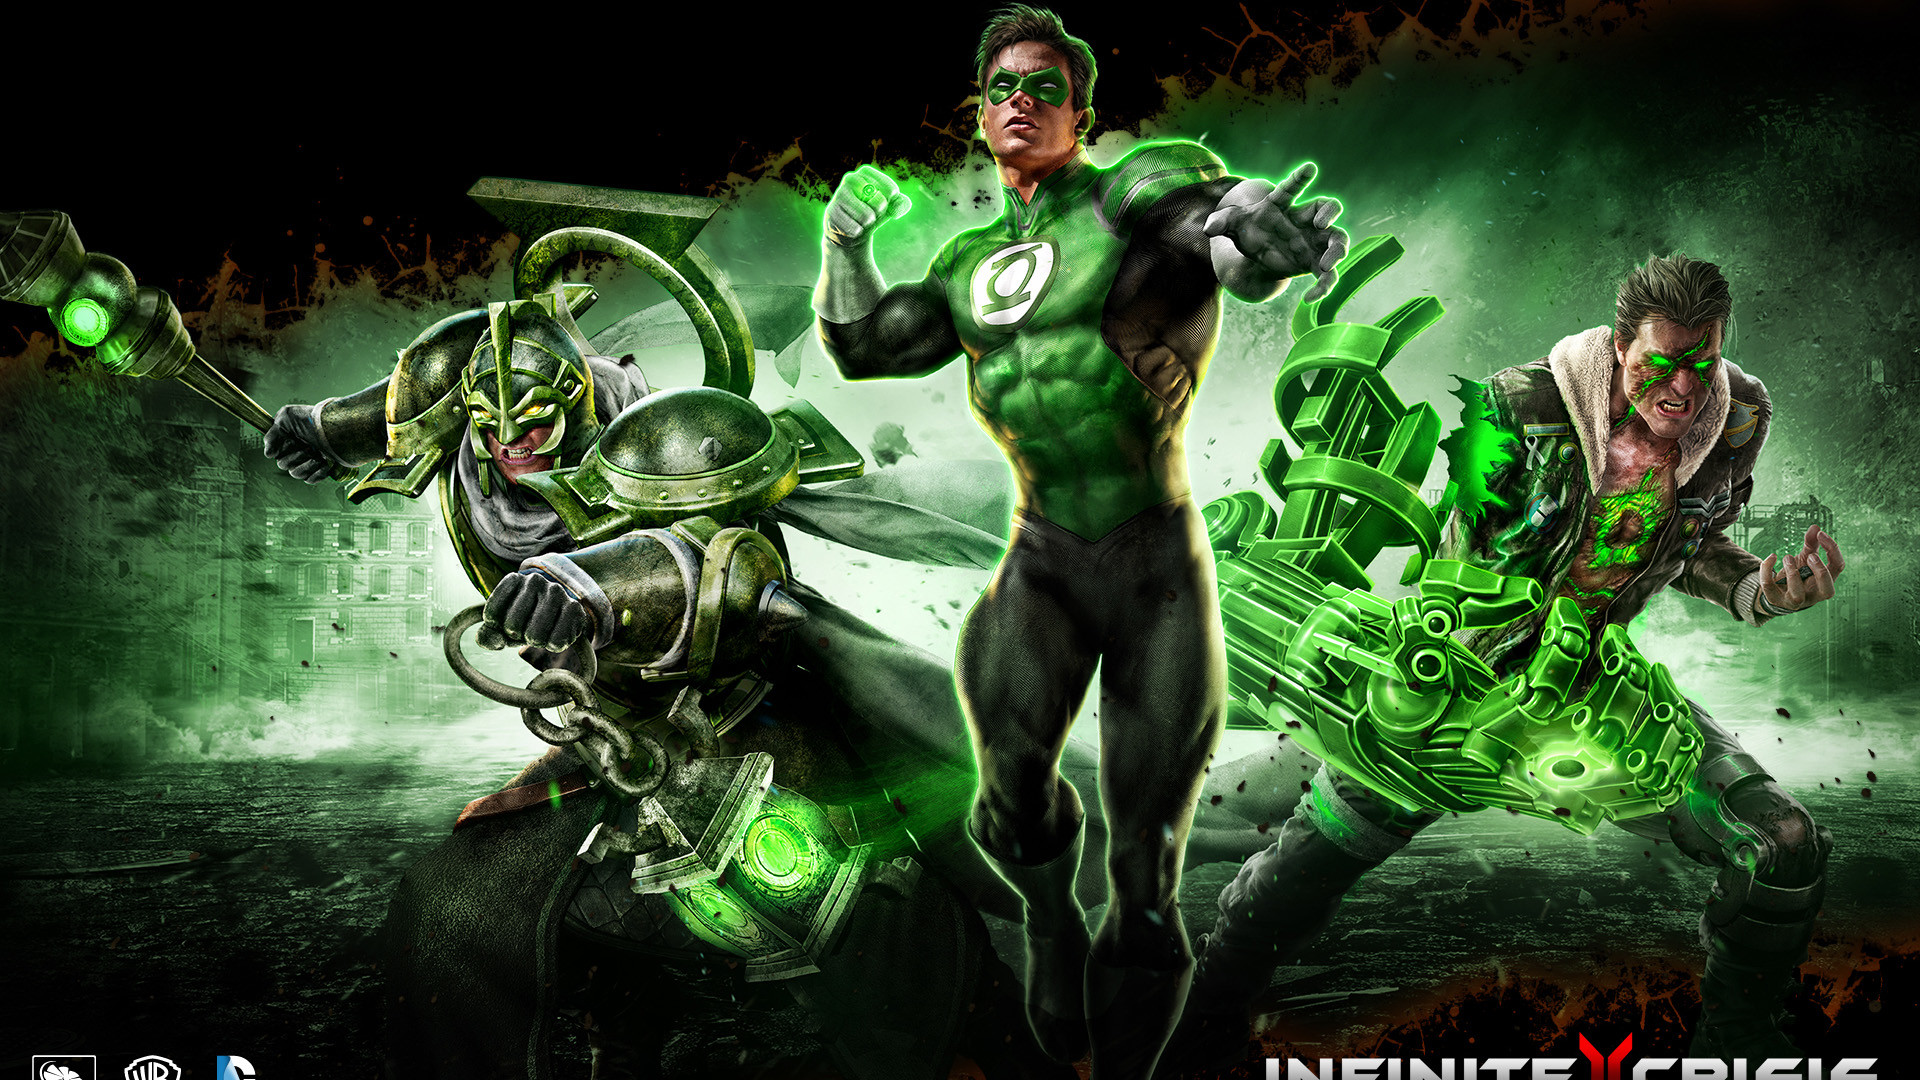 Awesome Green Lantern Wallpaper Images Cosmic Book News 6401136 Green Lantern Wallpaper 34